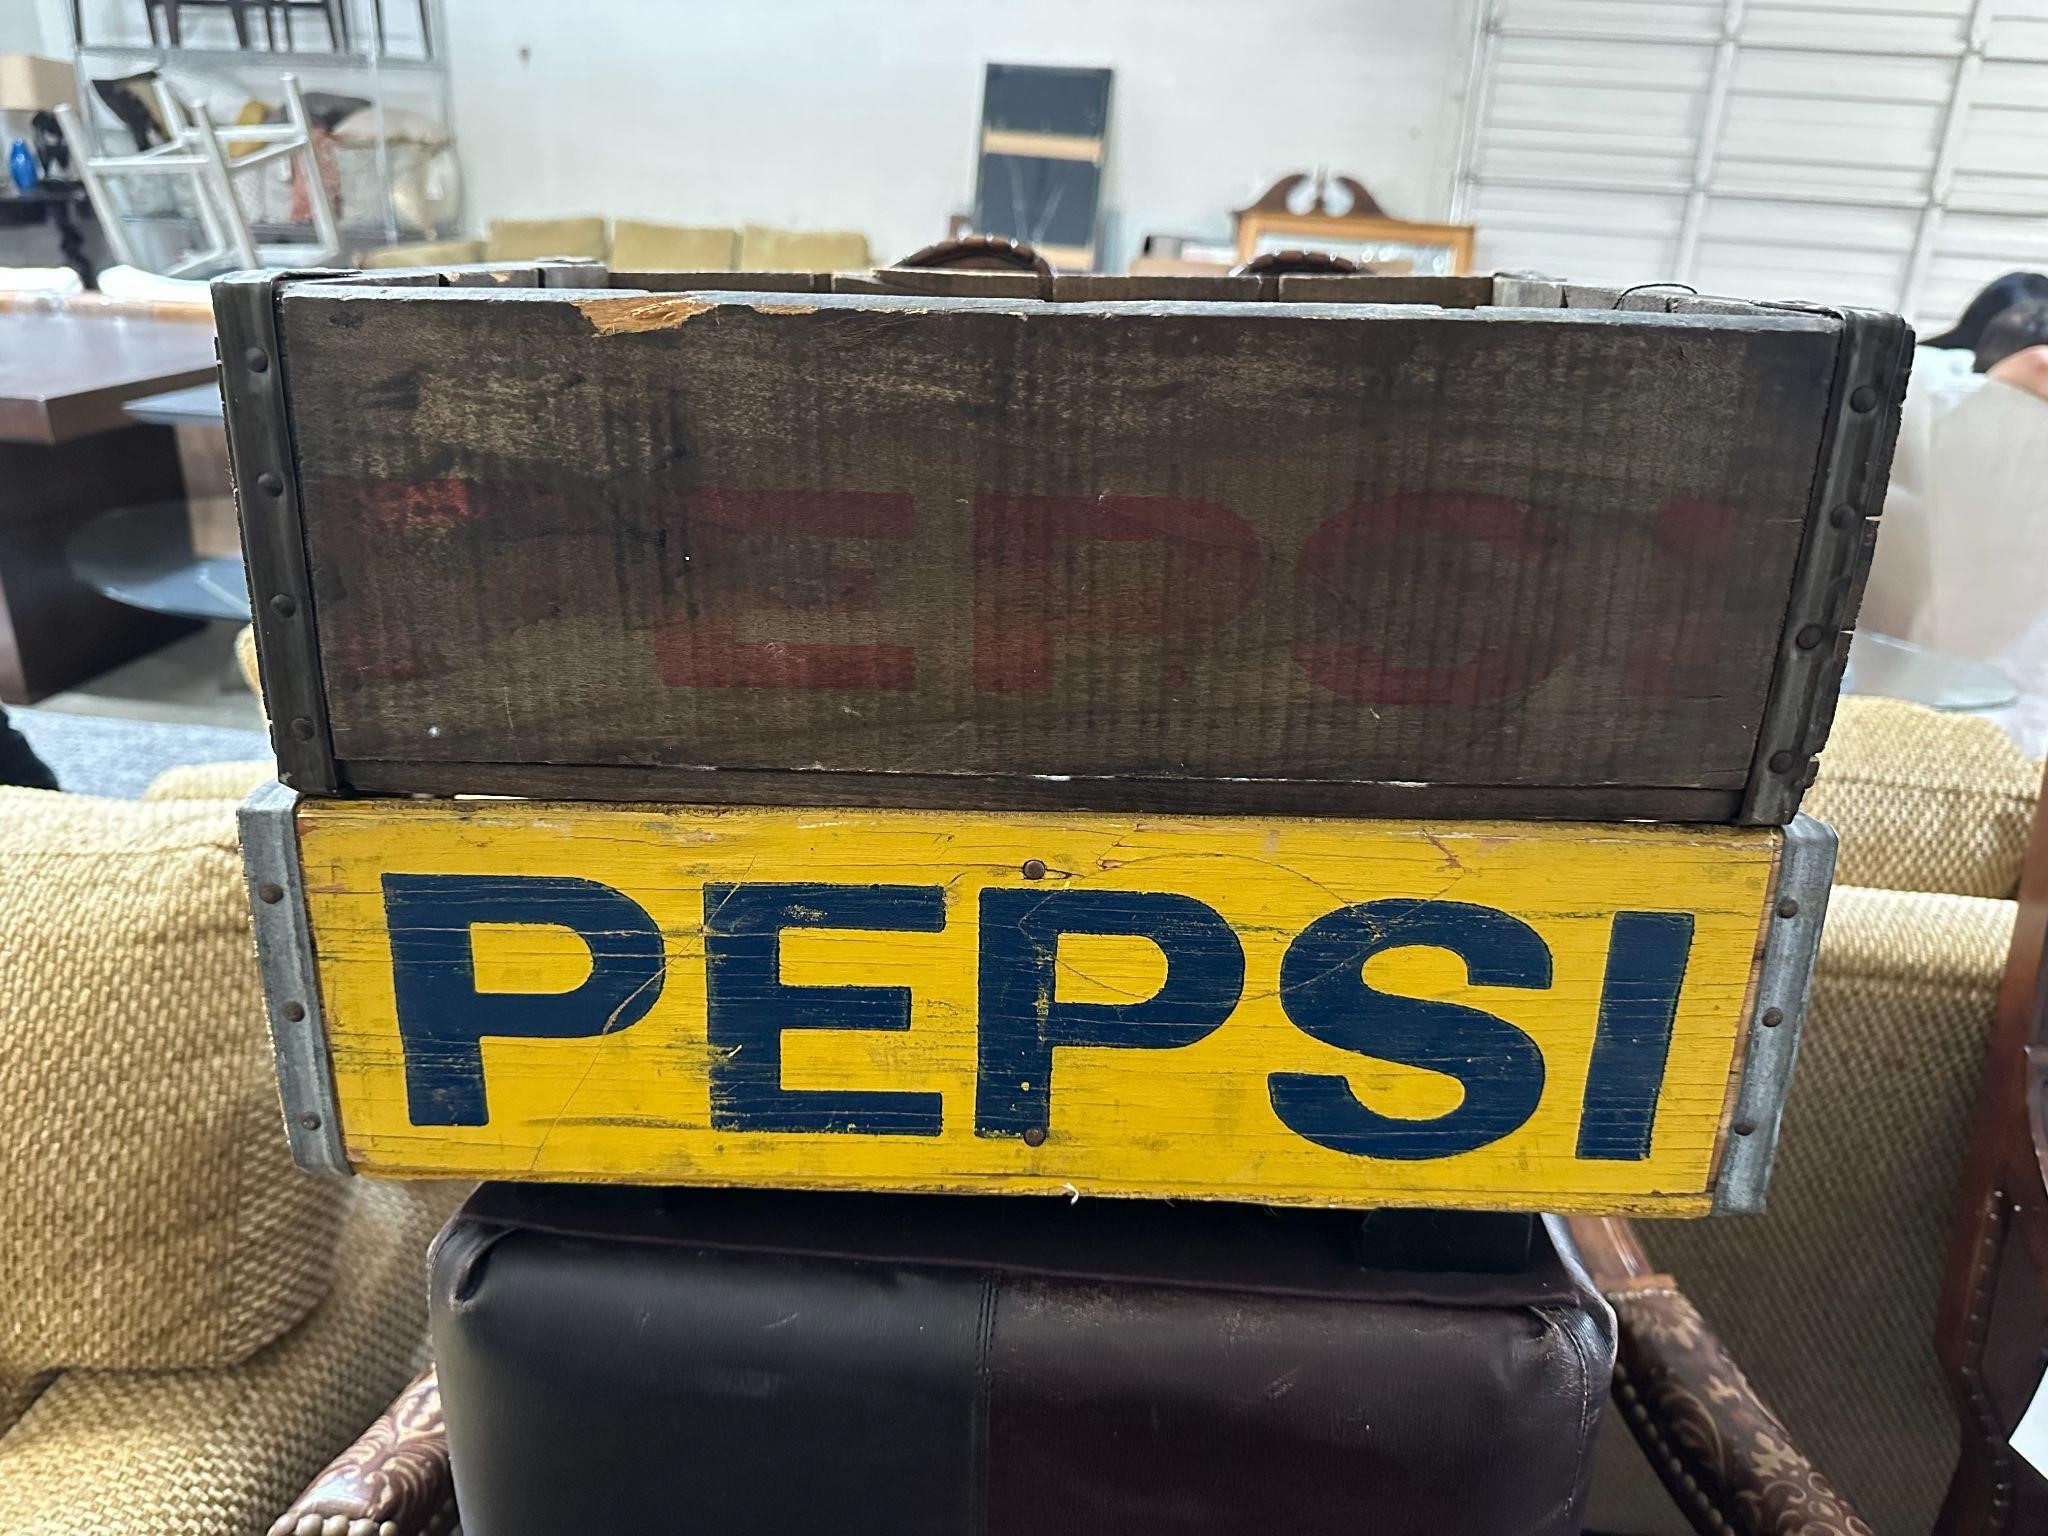 Pepsi wood boxes